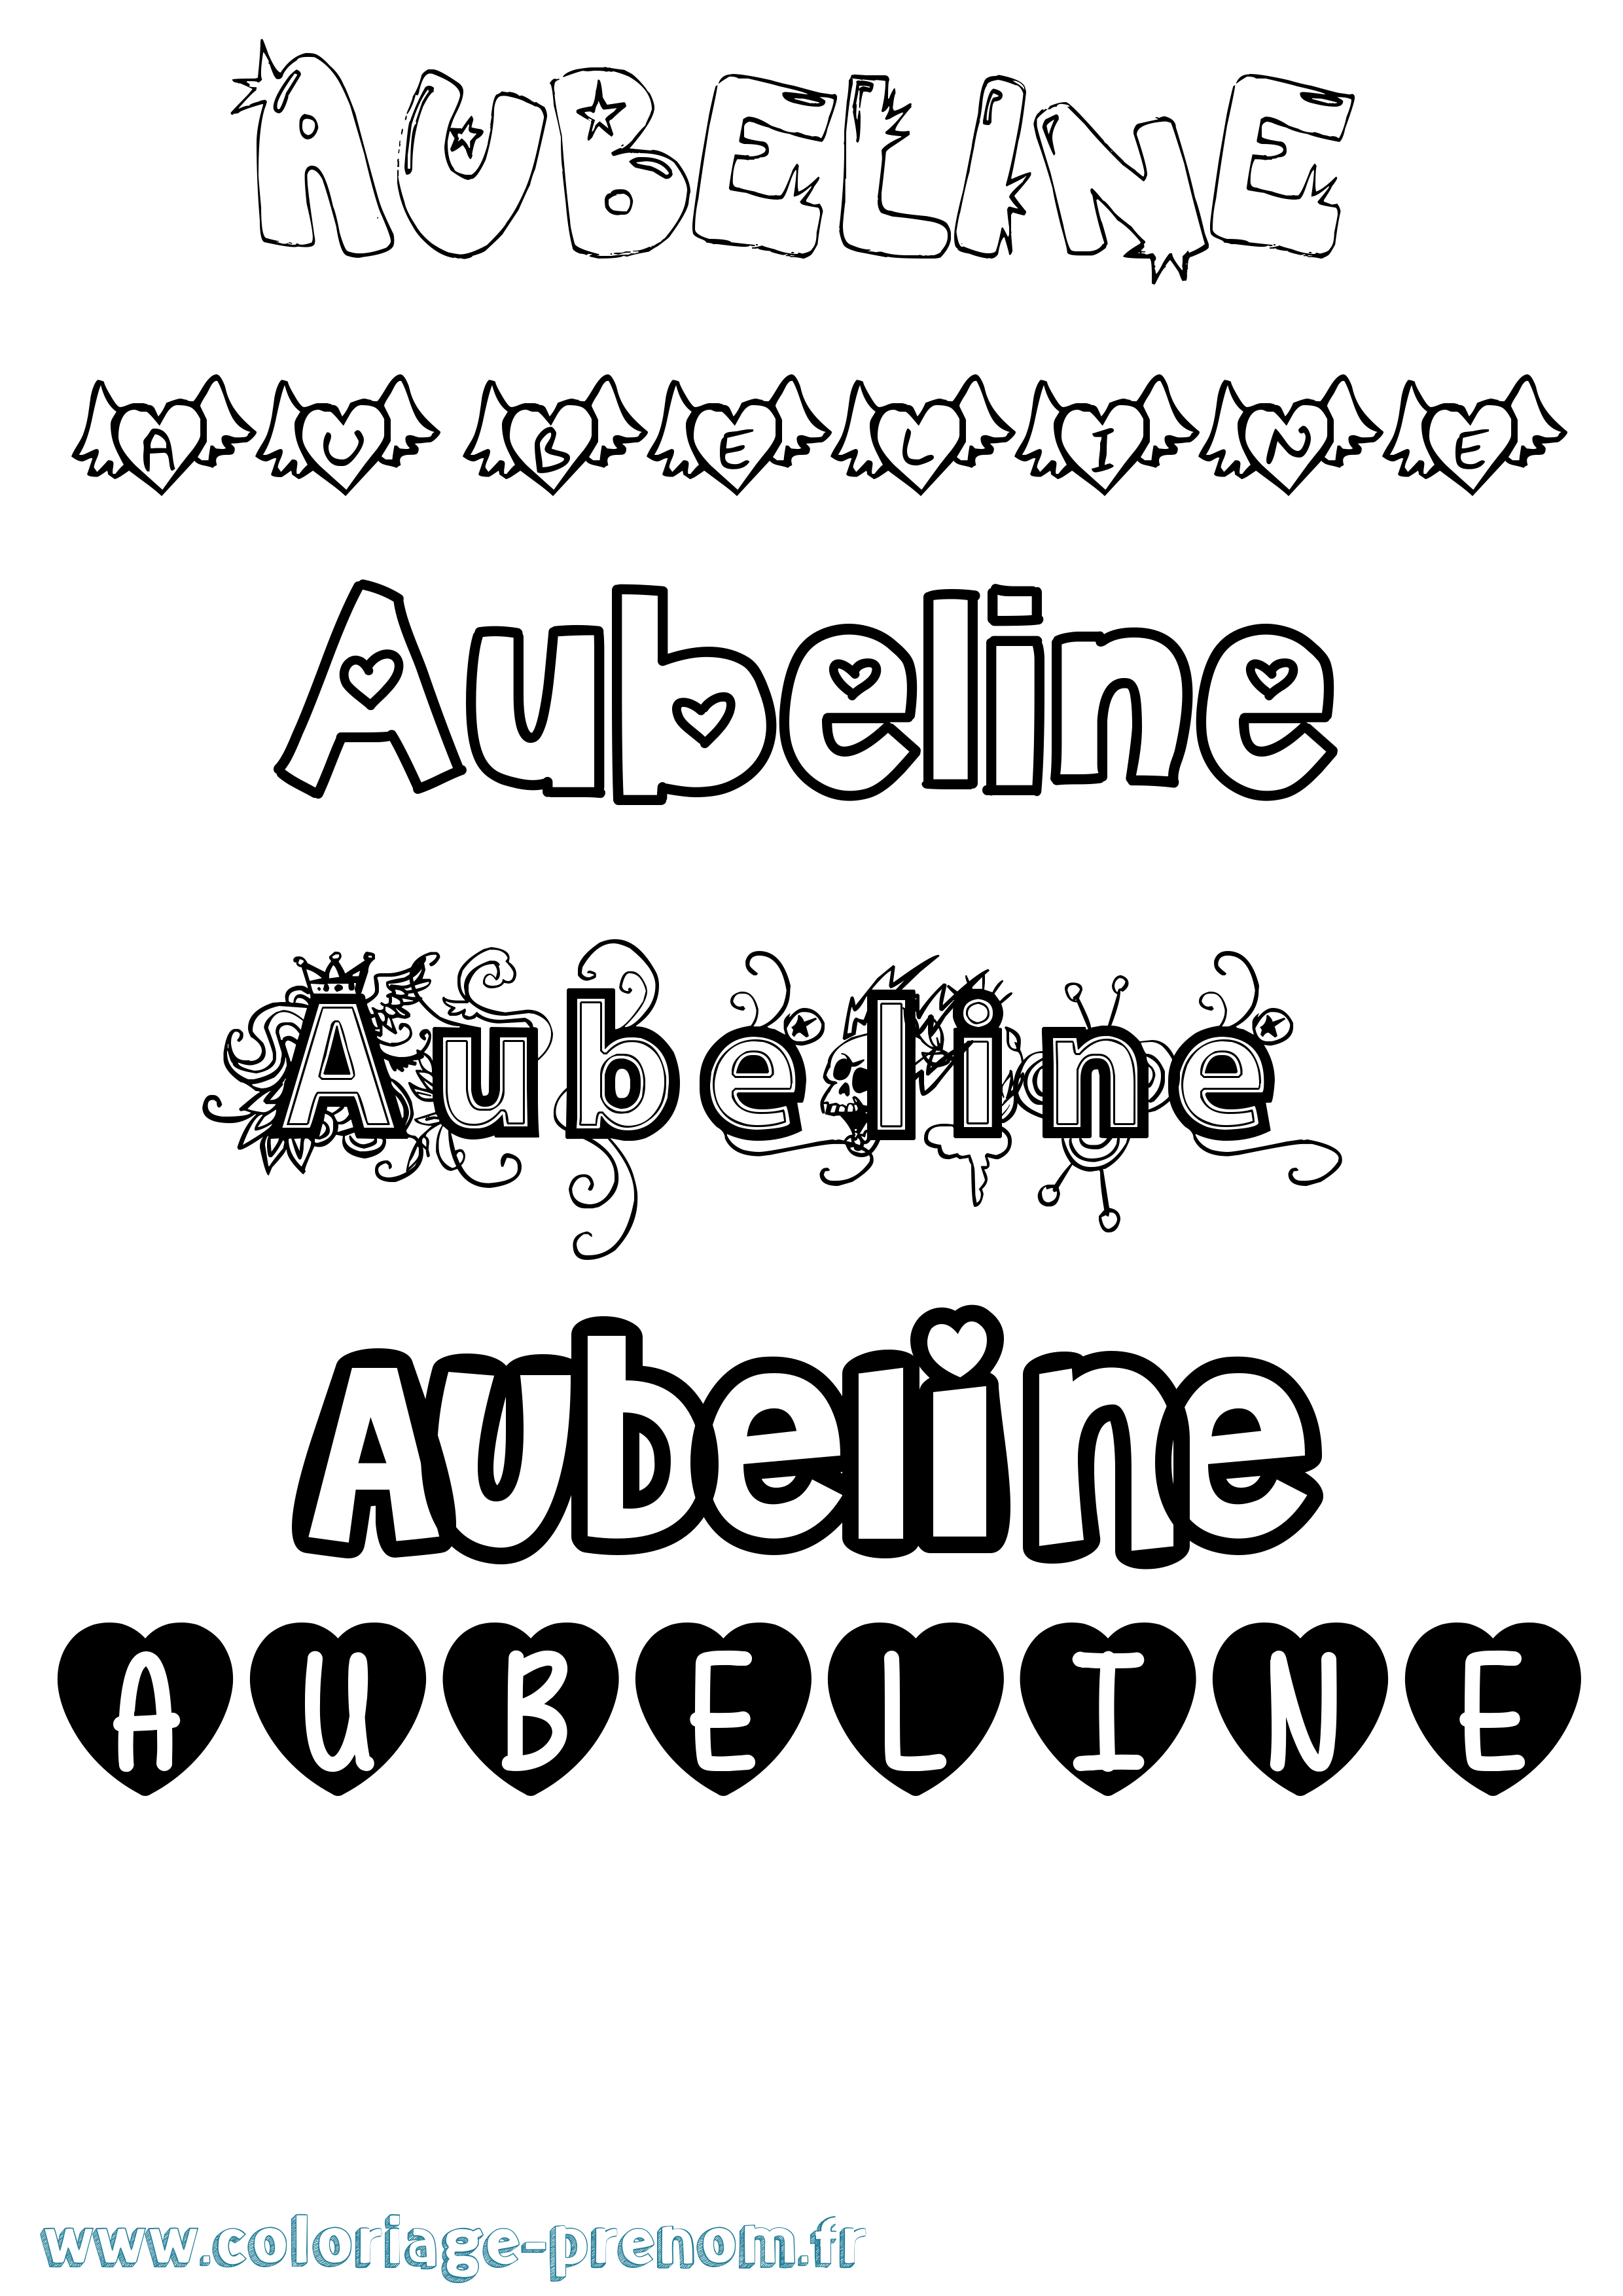 Coloriage prénom Aubeline Girly